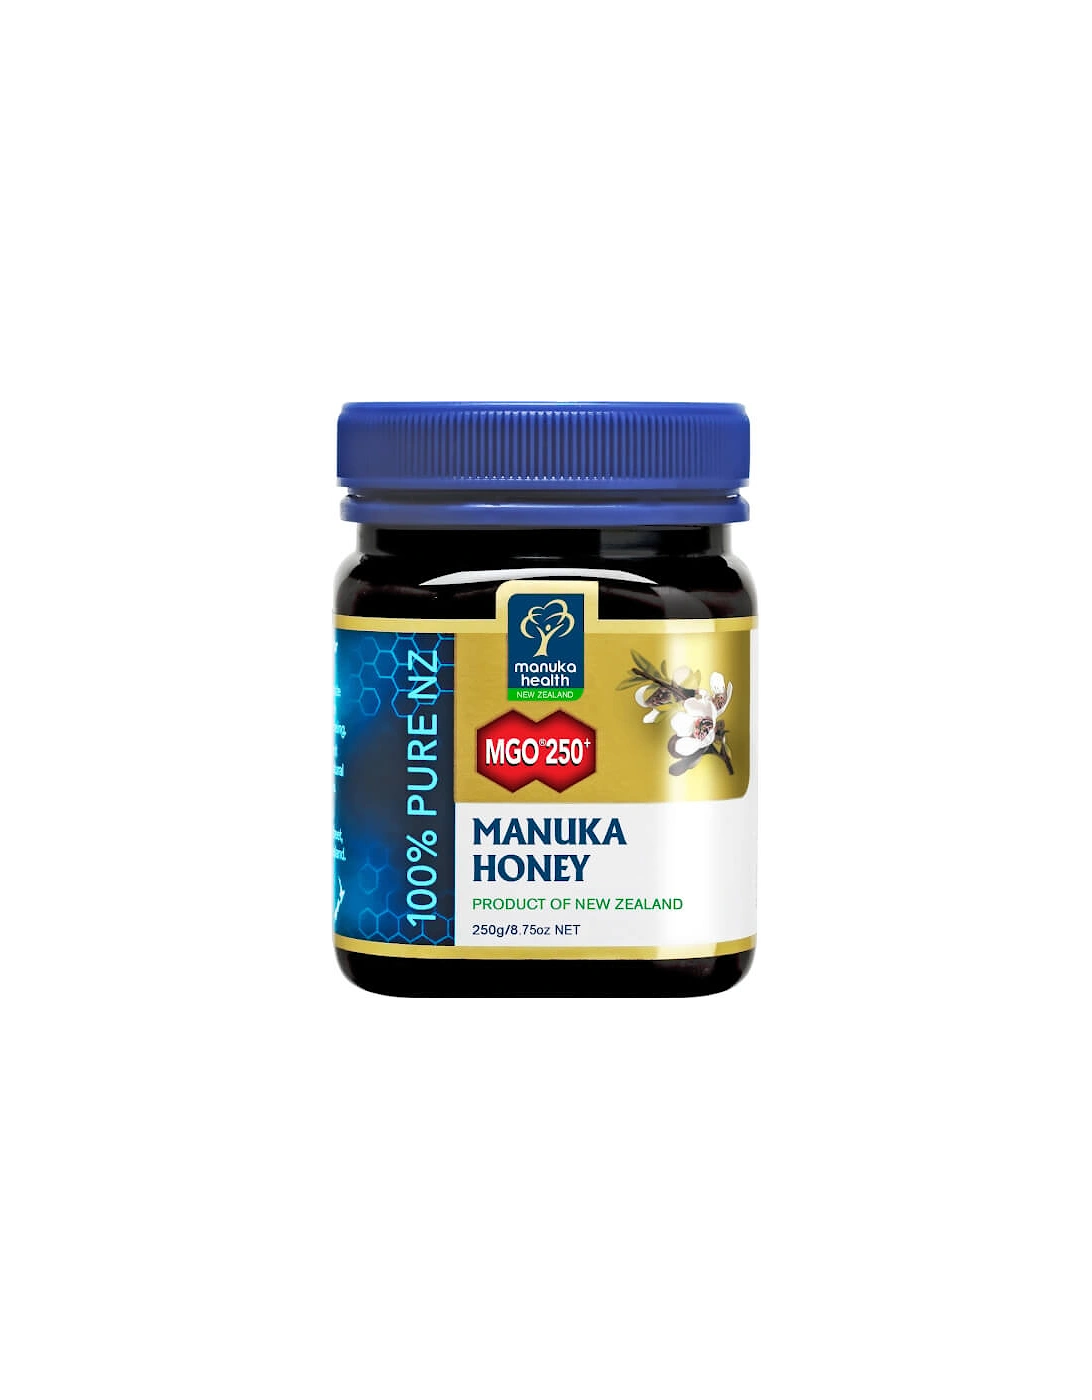 Health MGO 250+ Pure Monofloral Honey 250g - Health New Zealand Ltd - Health MGO 250+ Pure Monofloral Honey 250g - Health MGO 250+ Pure Honey Blend 500g, 2 of 1